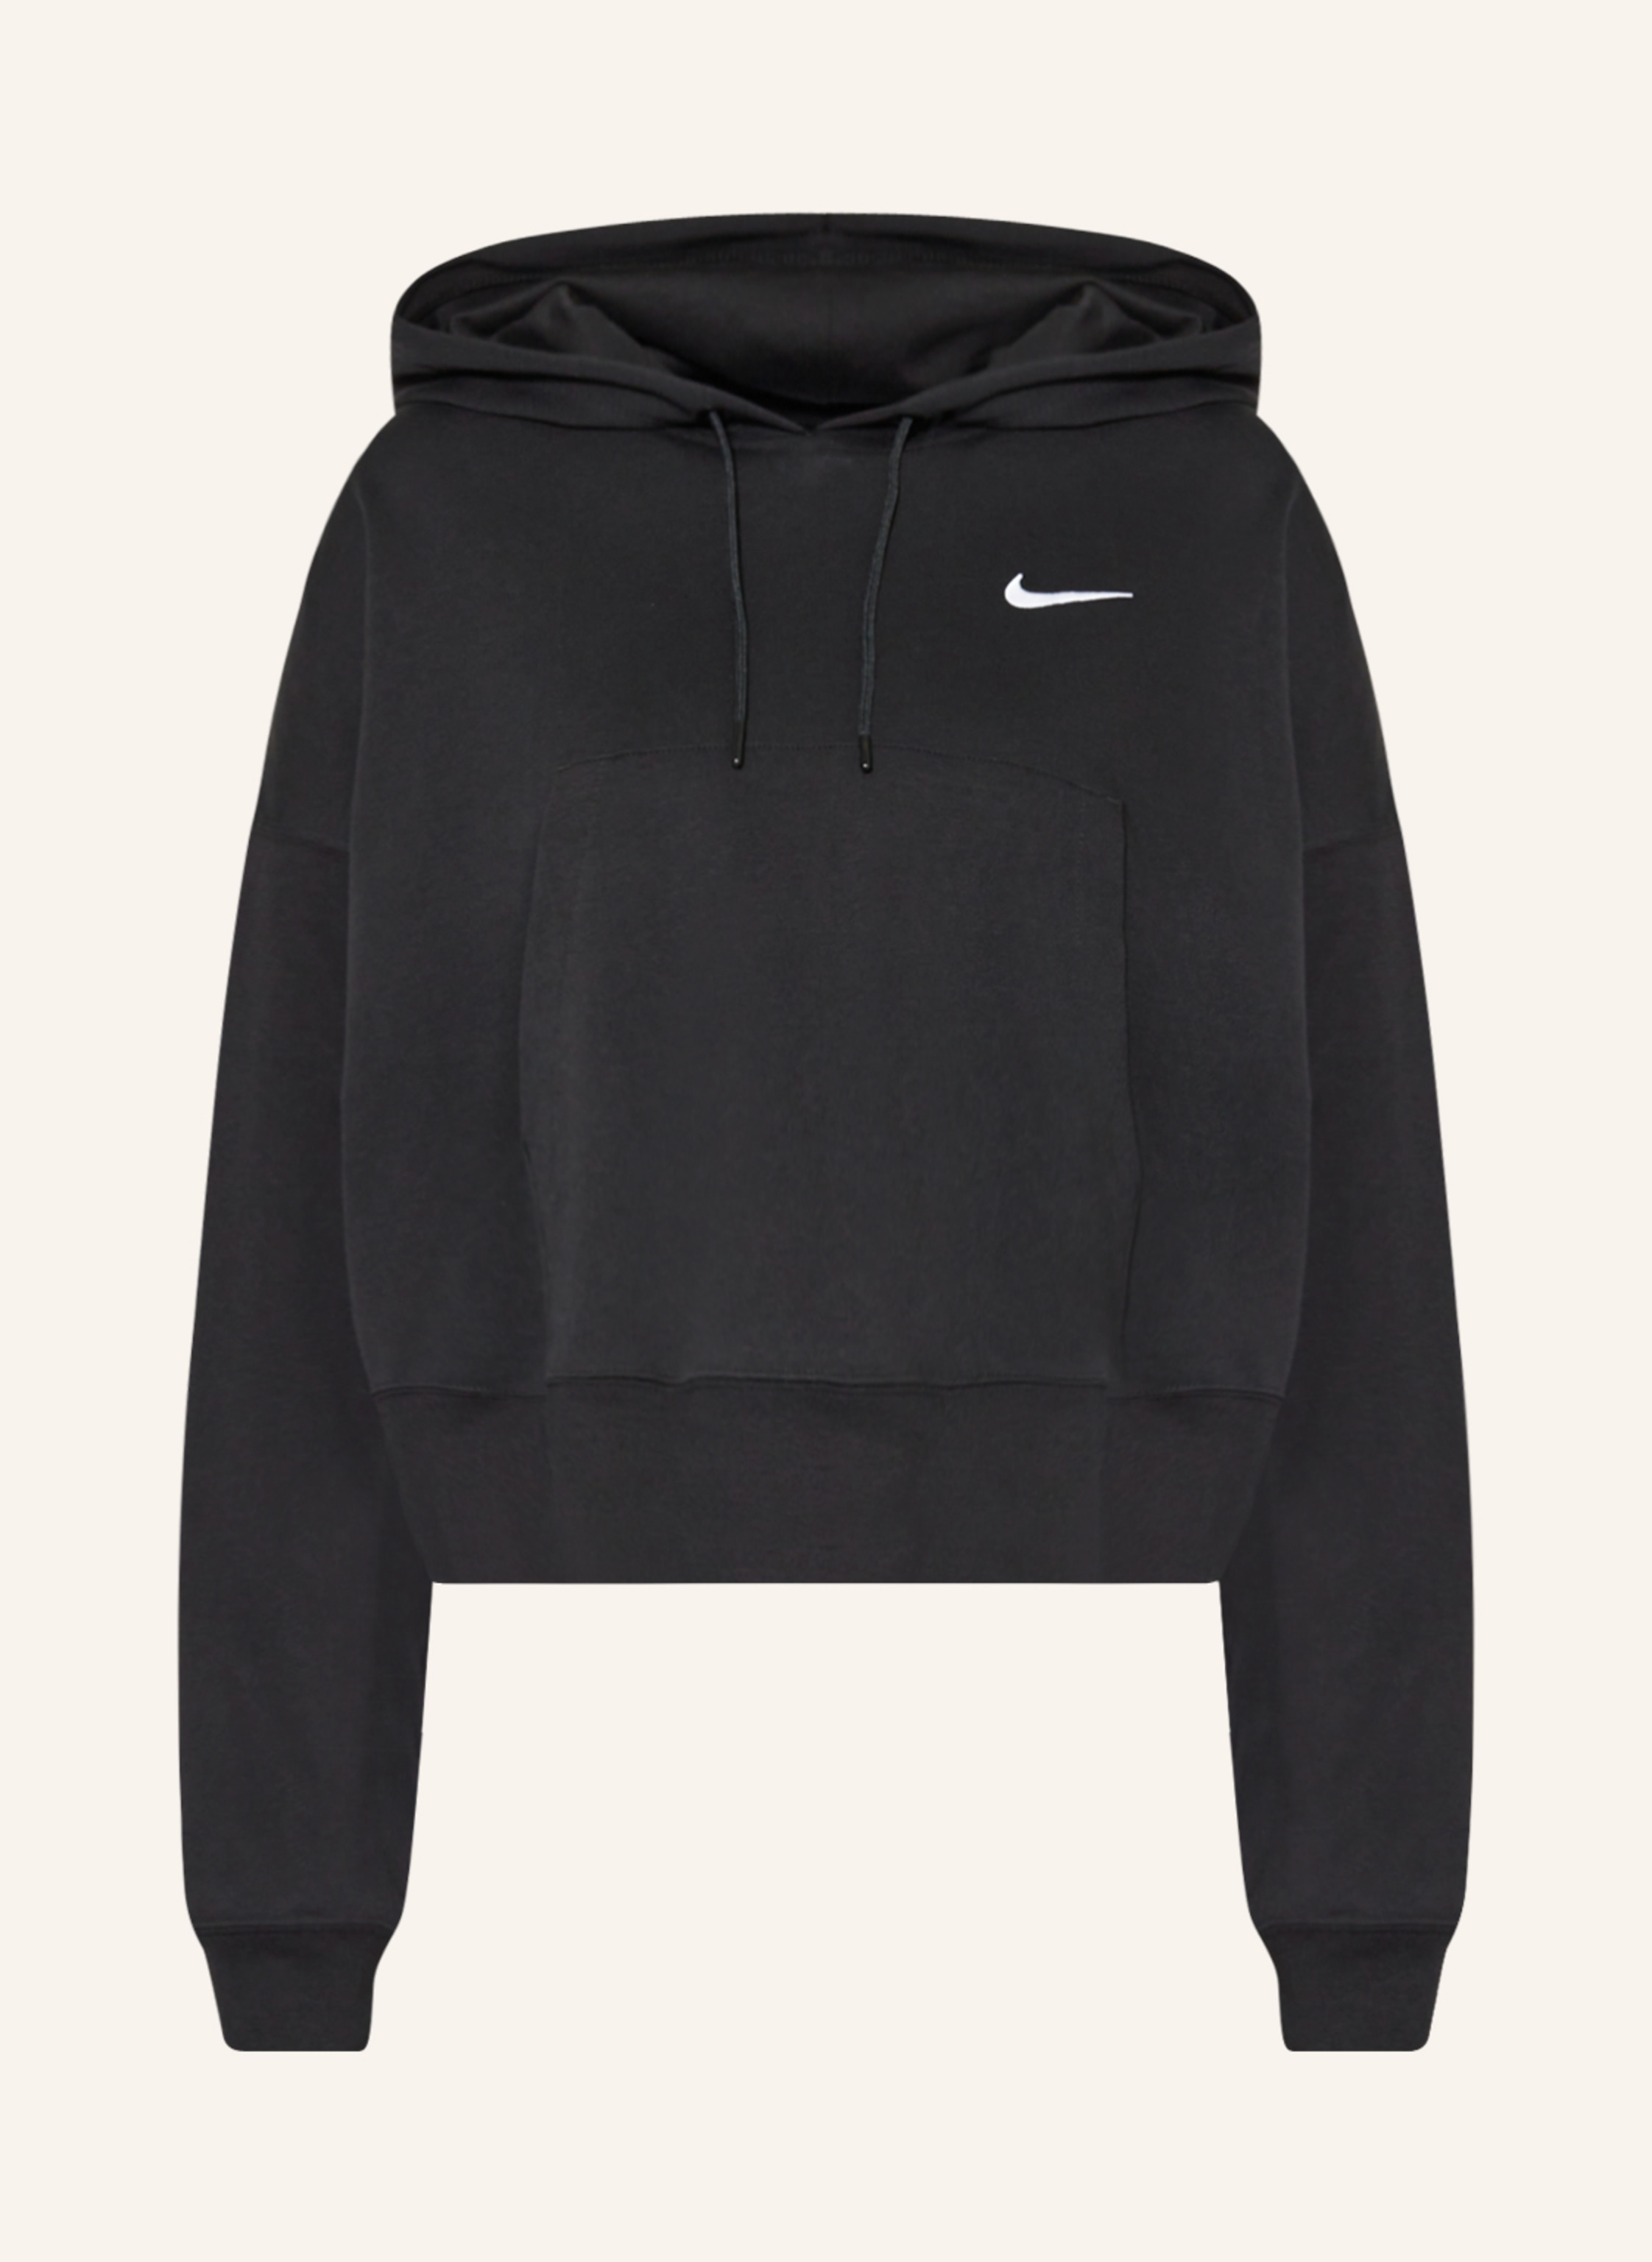 Nike Long Sleeve Hooded Top - Atlantic Sportswear